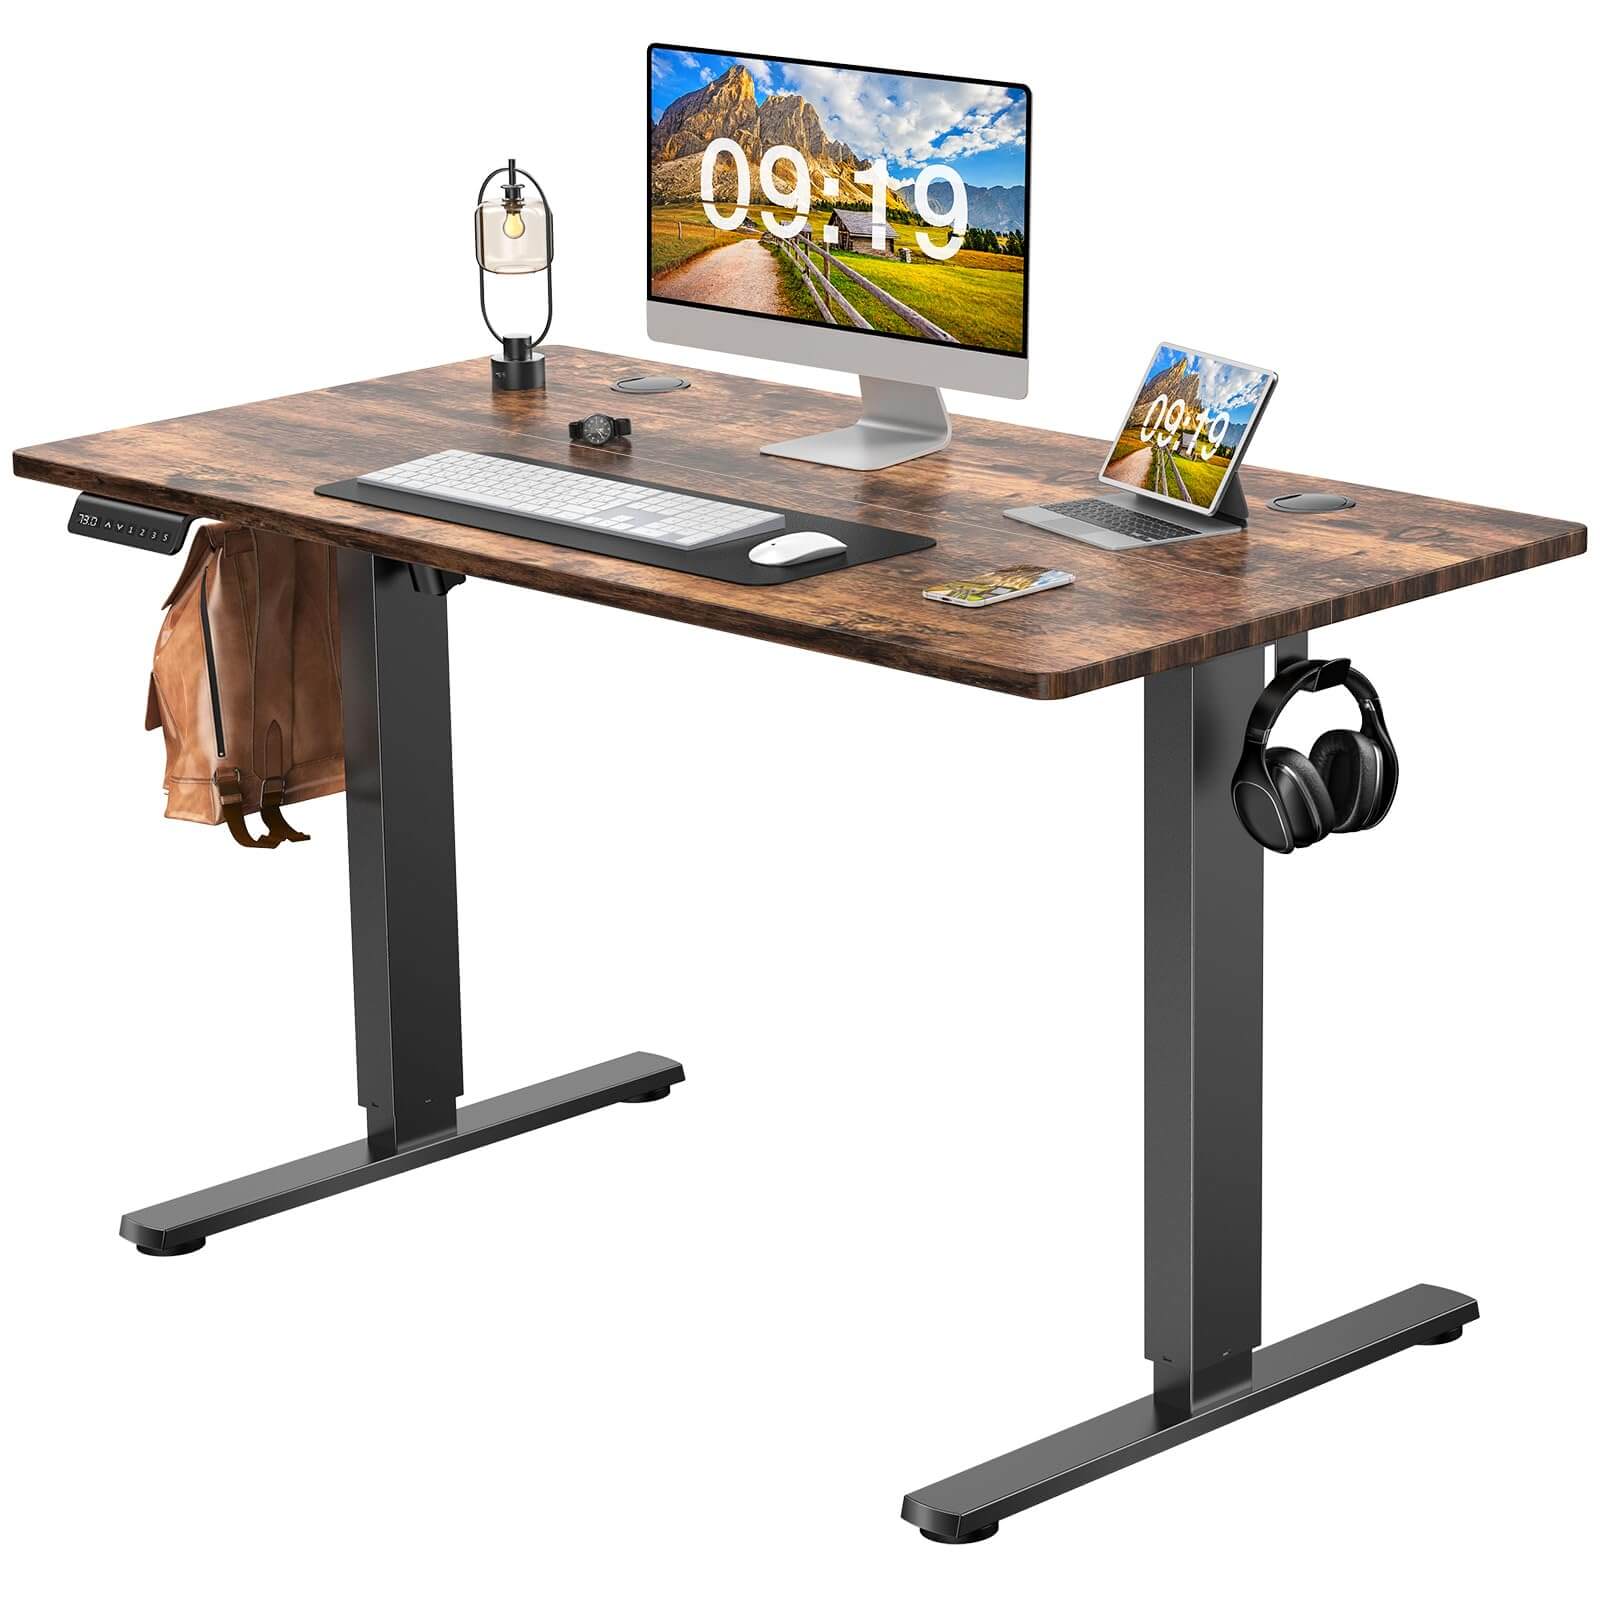 electric-adjustable-standing-desk#Color_Brown#Size_48'' x 24"